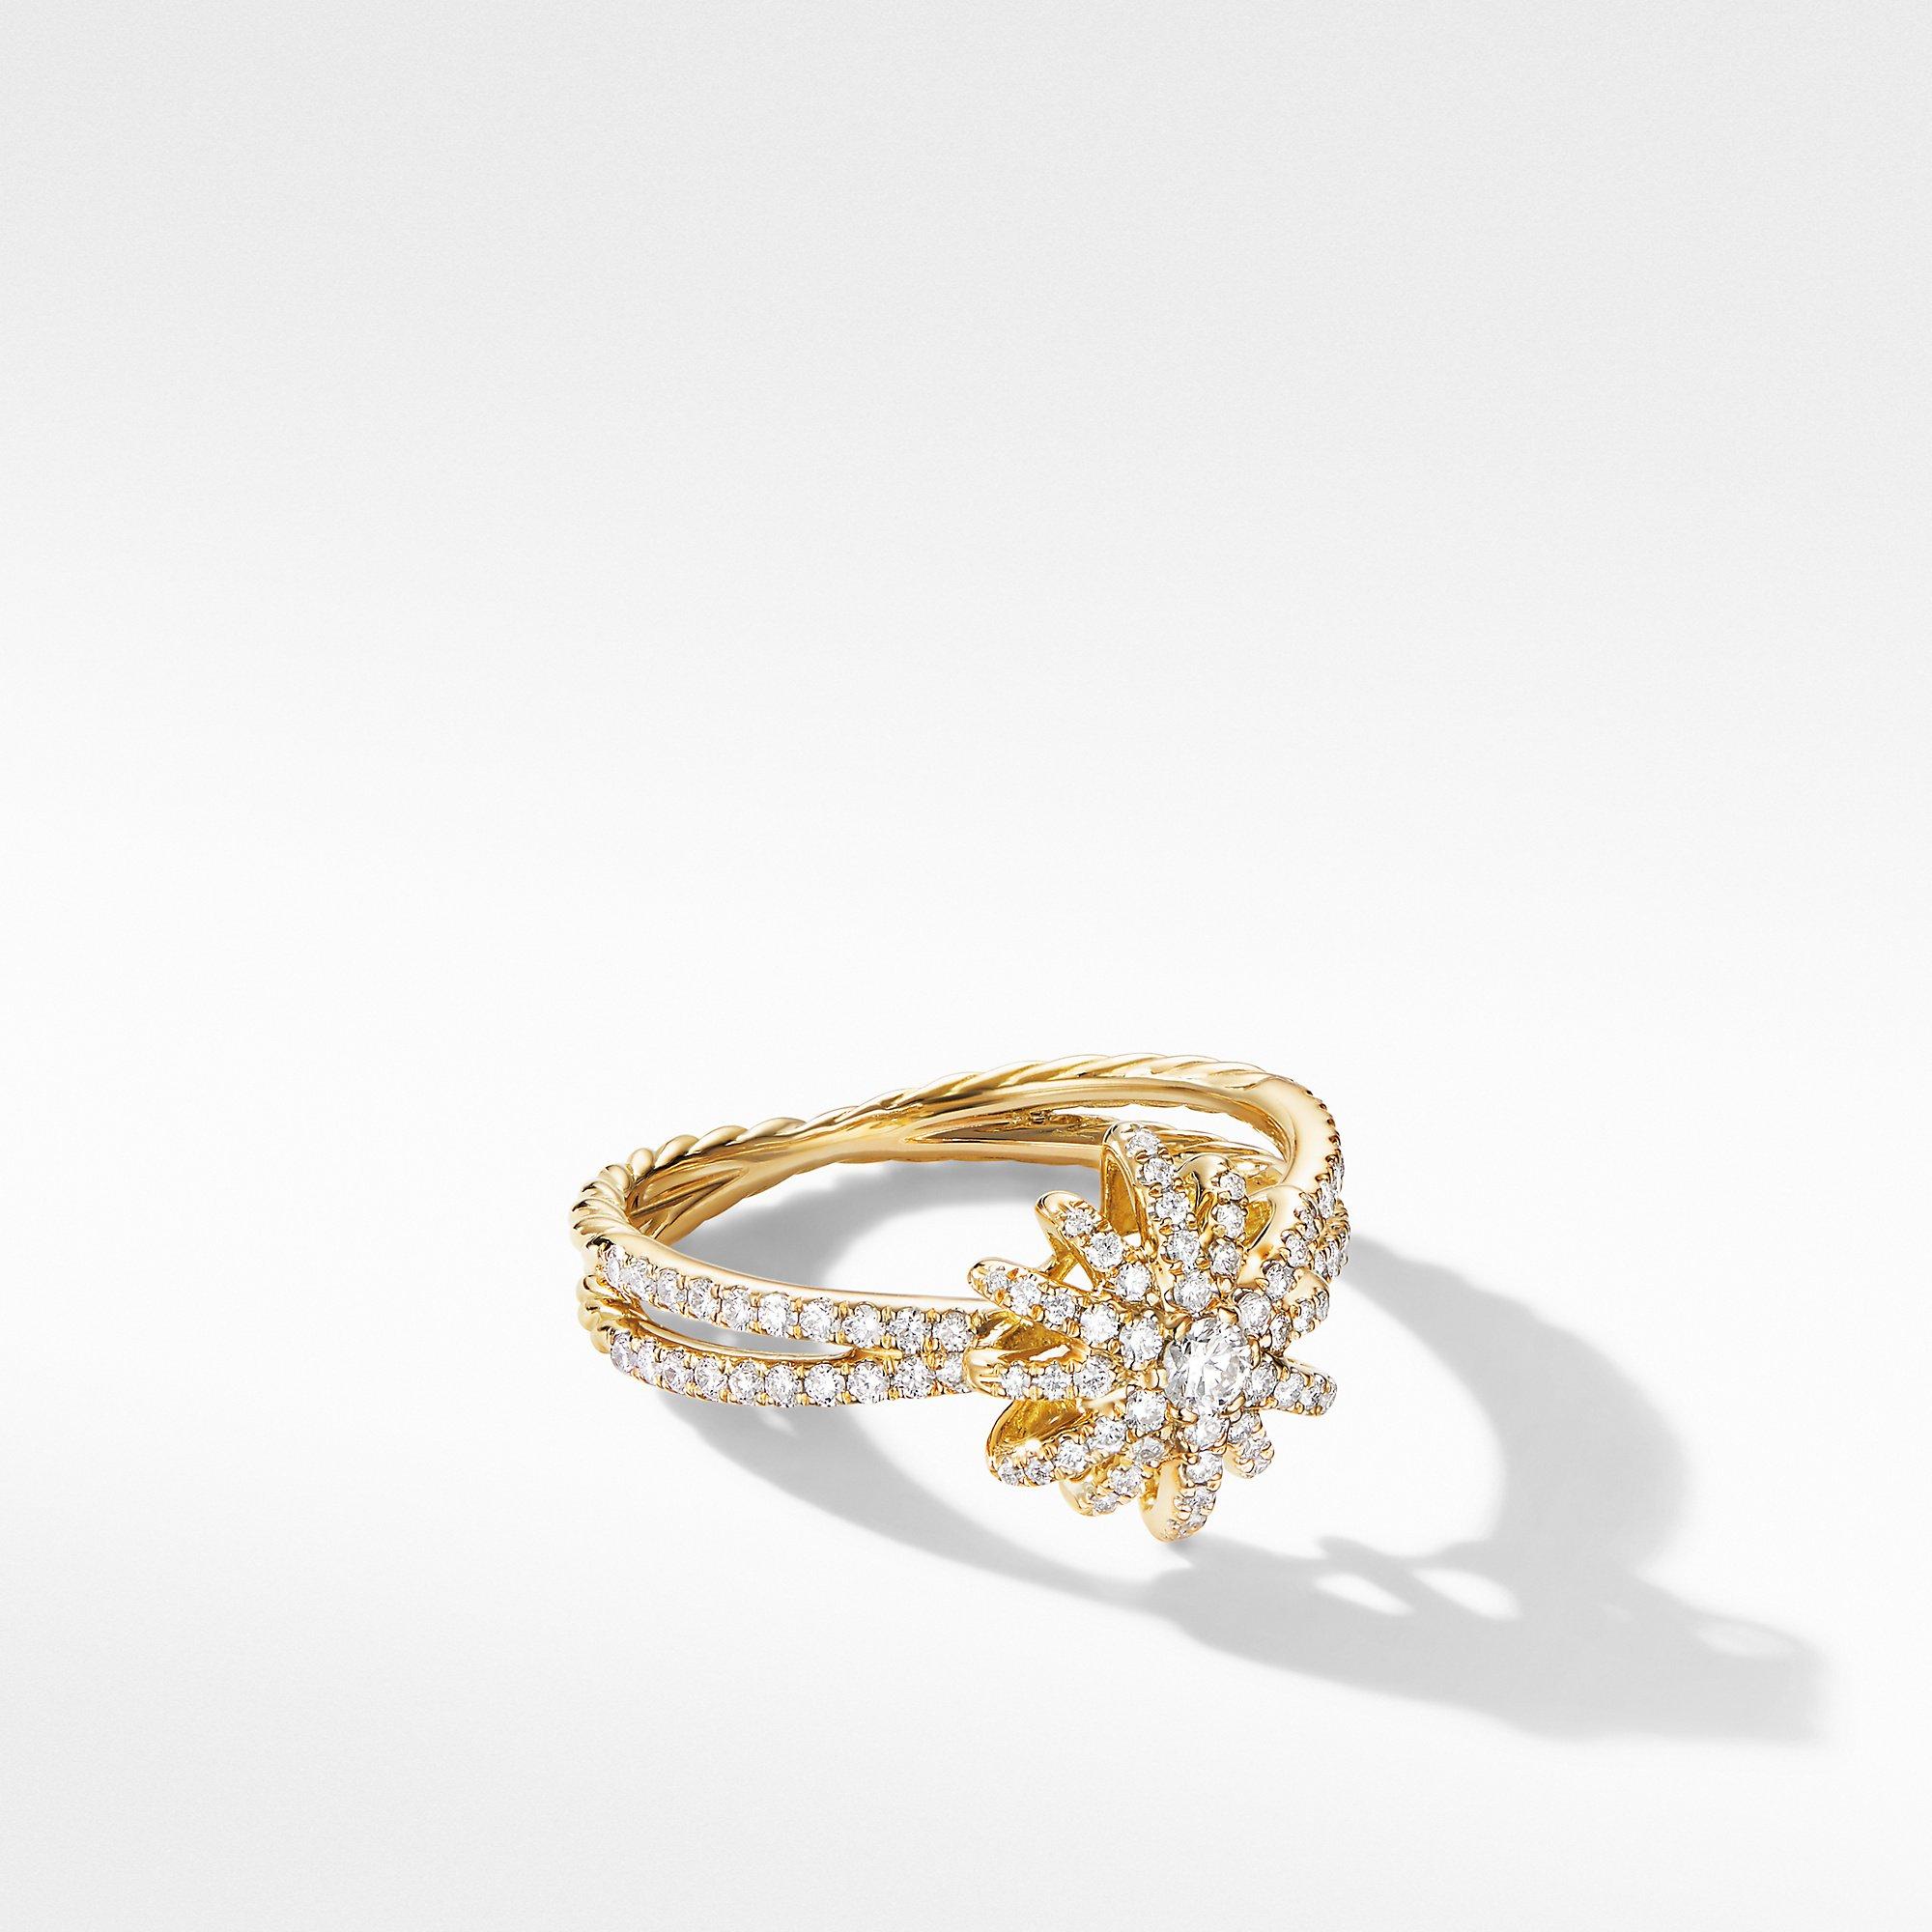 David Yurman Starburst Ring in 18k Yellow Gold with Pave Diamonds, size 6